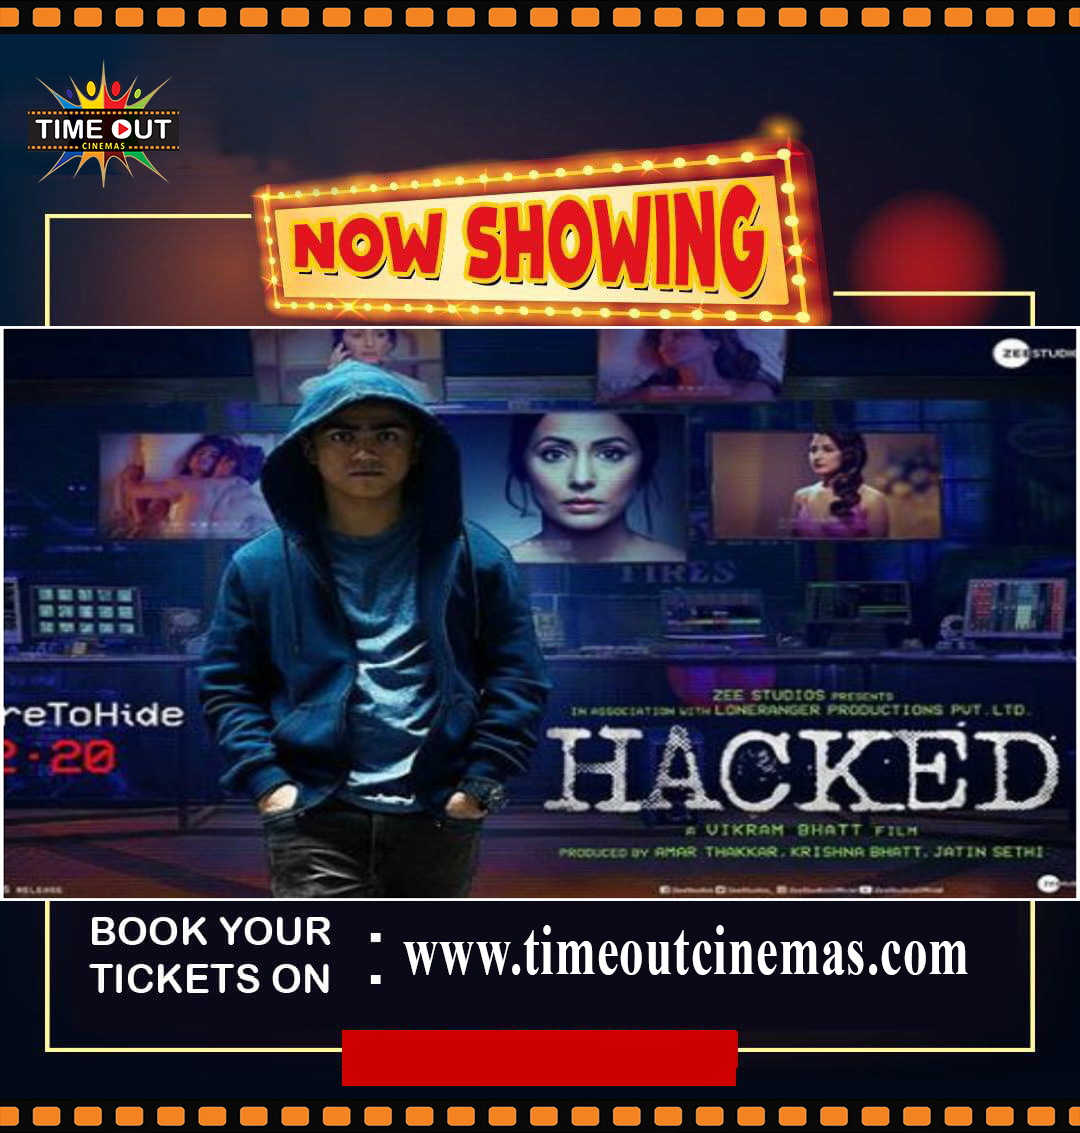 ACCESS GRANTED. Enter the world of #Hacked. In cinemas now.
Book tickets now: timeoutcinemas.com
#VikramBhattOfficialZee #ZeeStudios #HinaKhan #RohanShah #SidMakkar #AmarThakkar #KrishnaBhatt #NowhereToHide #JatinSethi #TimeOutCinemas #TimeOutCinema #TimeOutUpdates